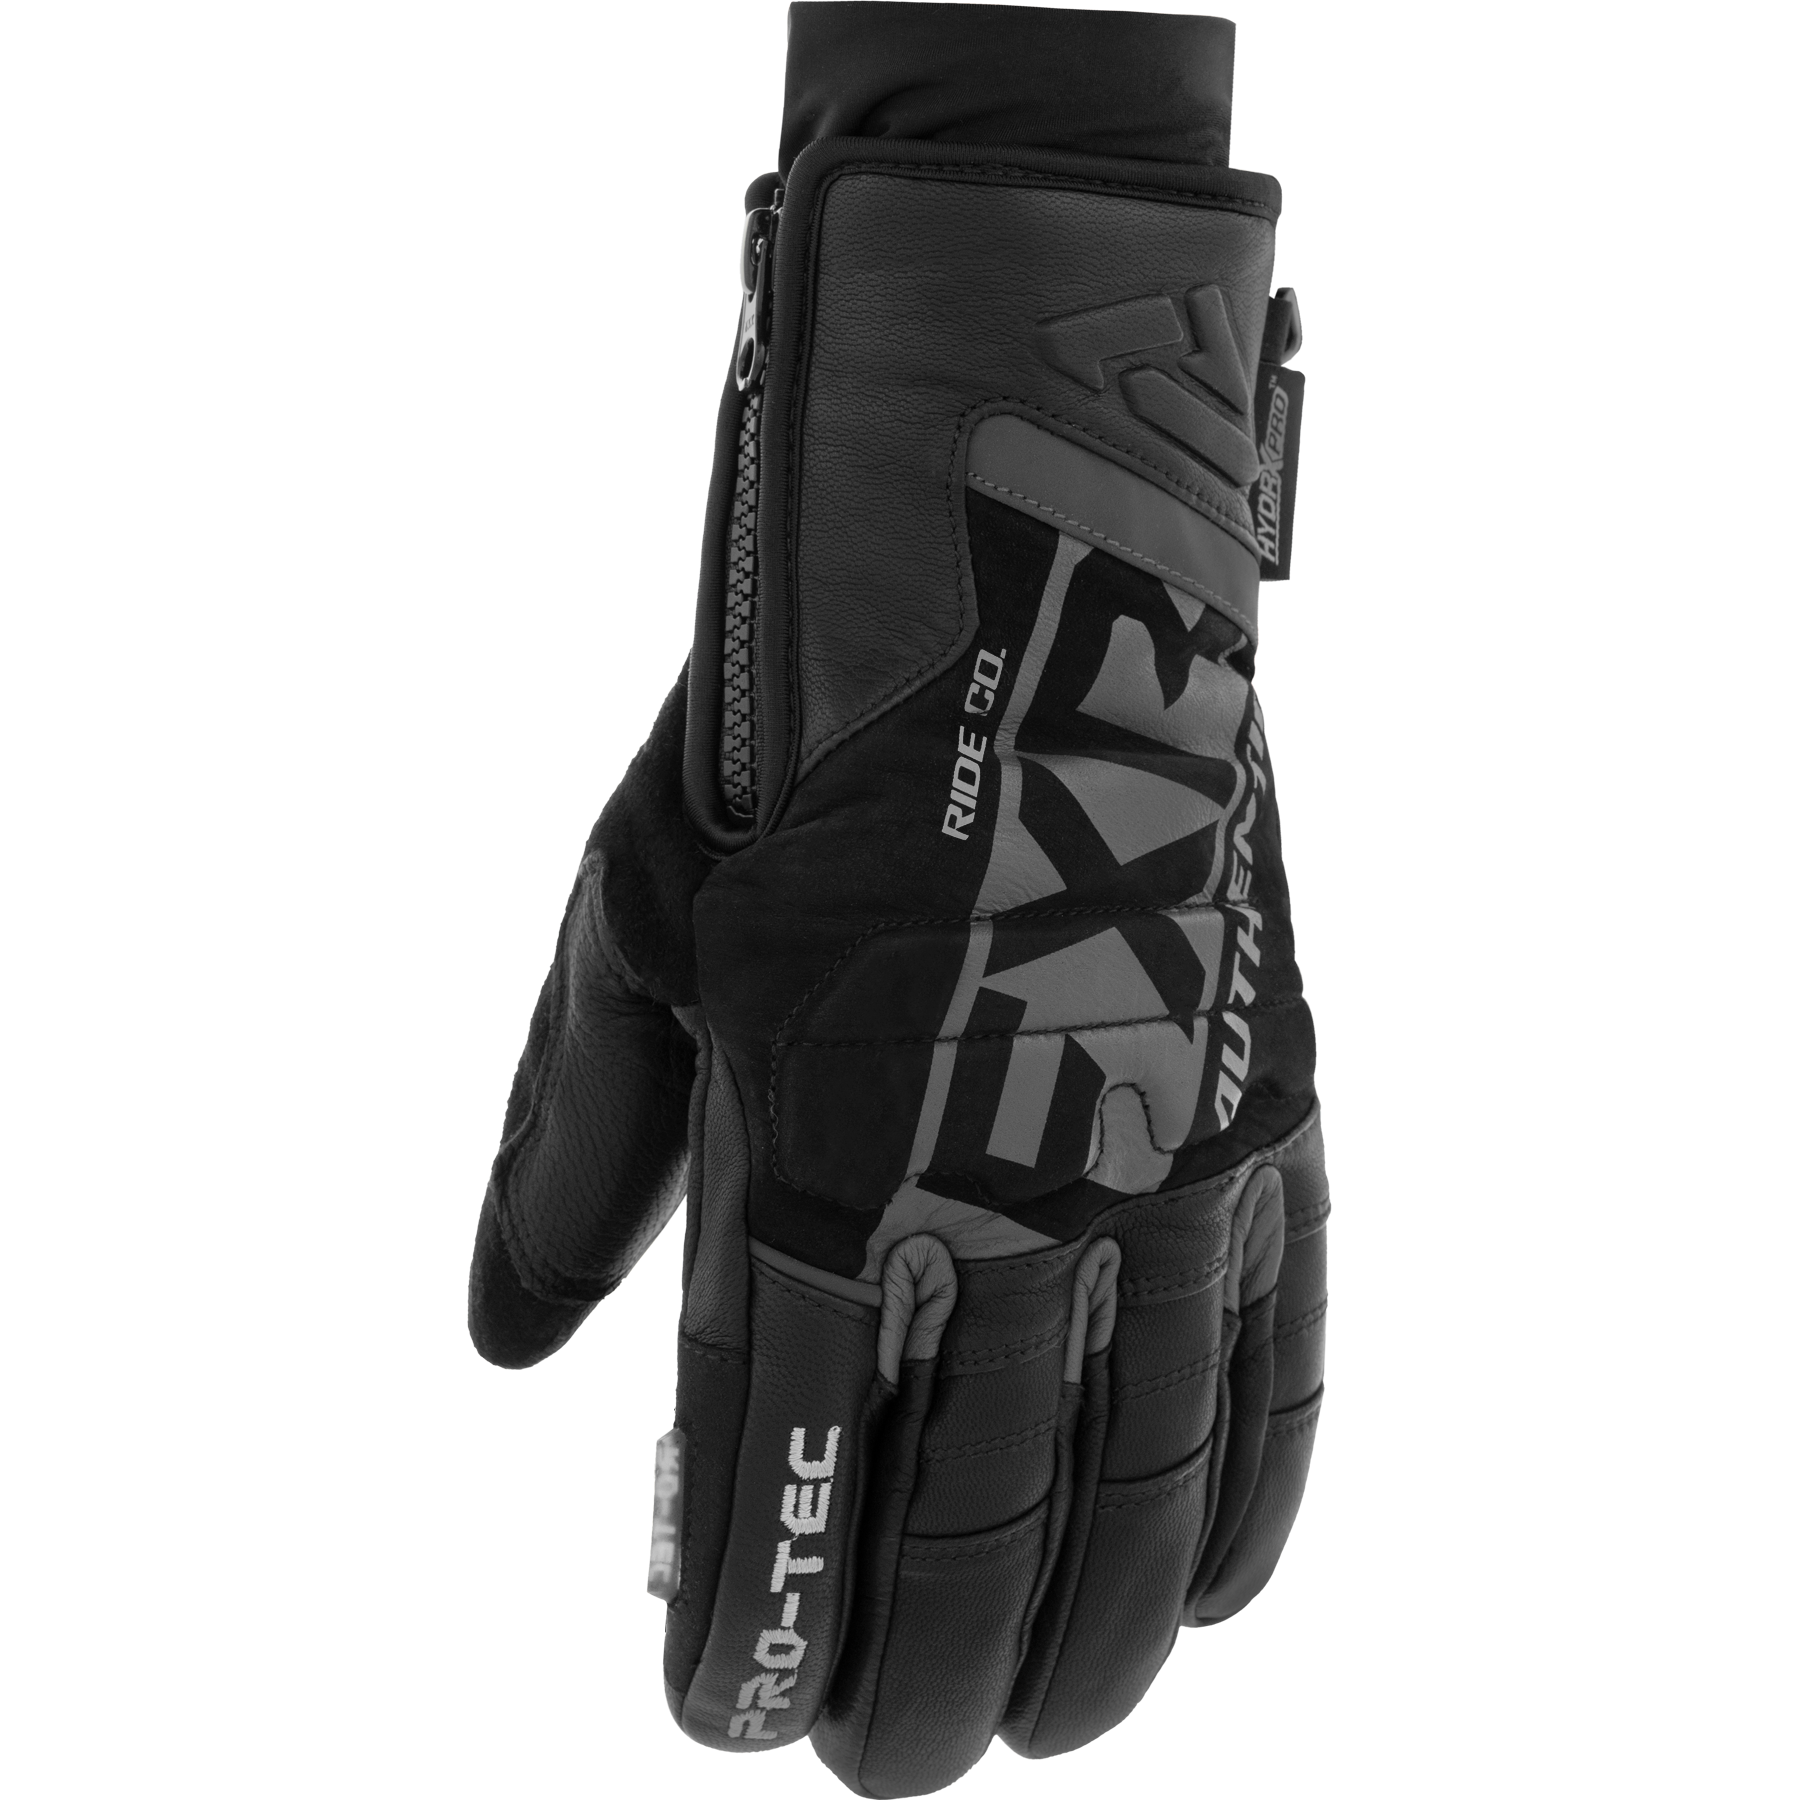 fxr racing gloves for men protec leather